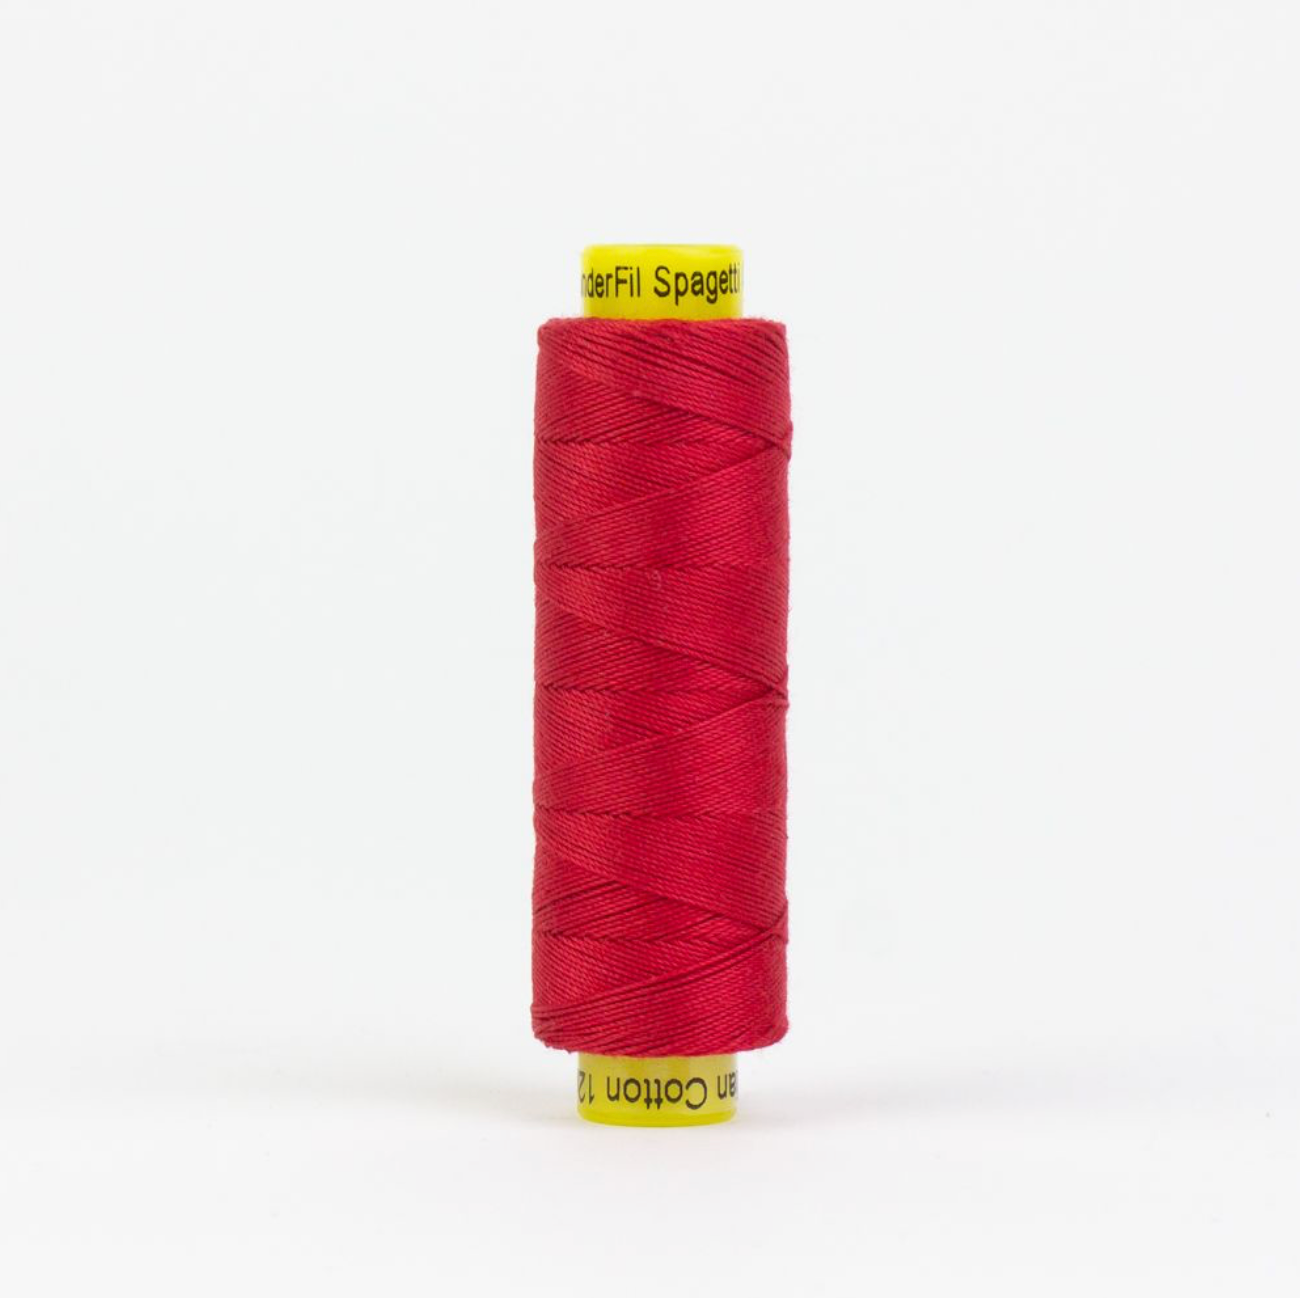 Spagetti 12wt Egyptian Cotton Thread - 109yd Spool - Bright Warm Red SP-01